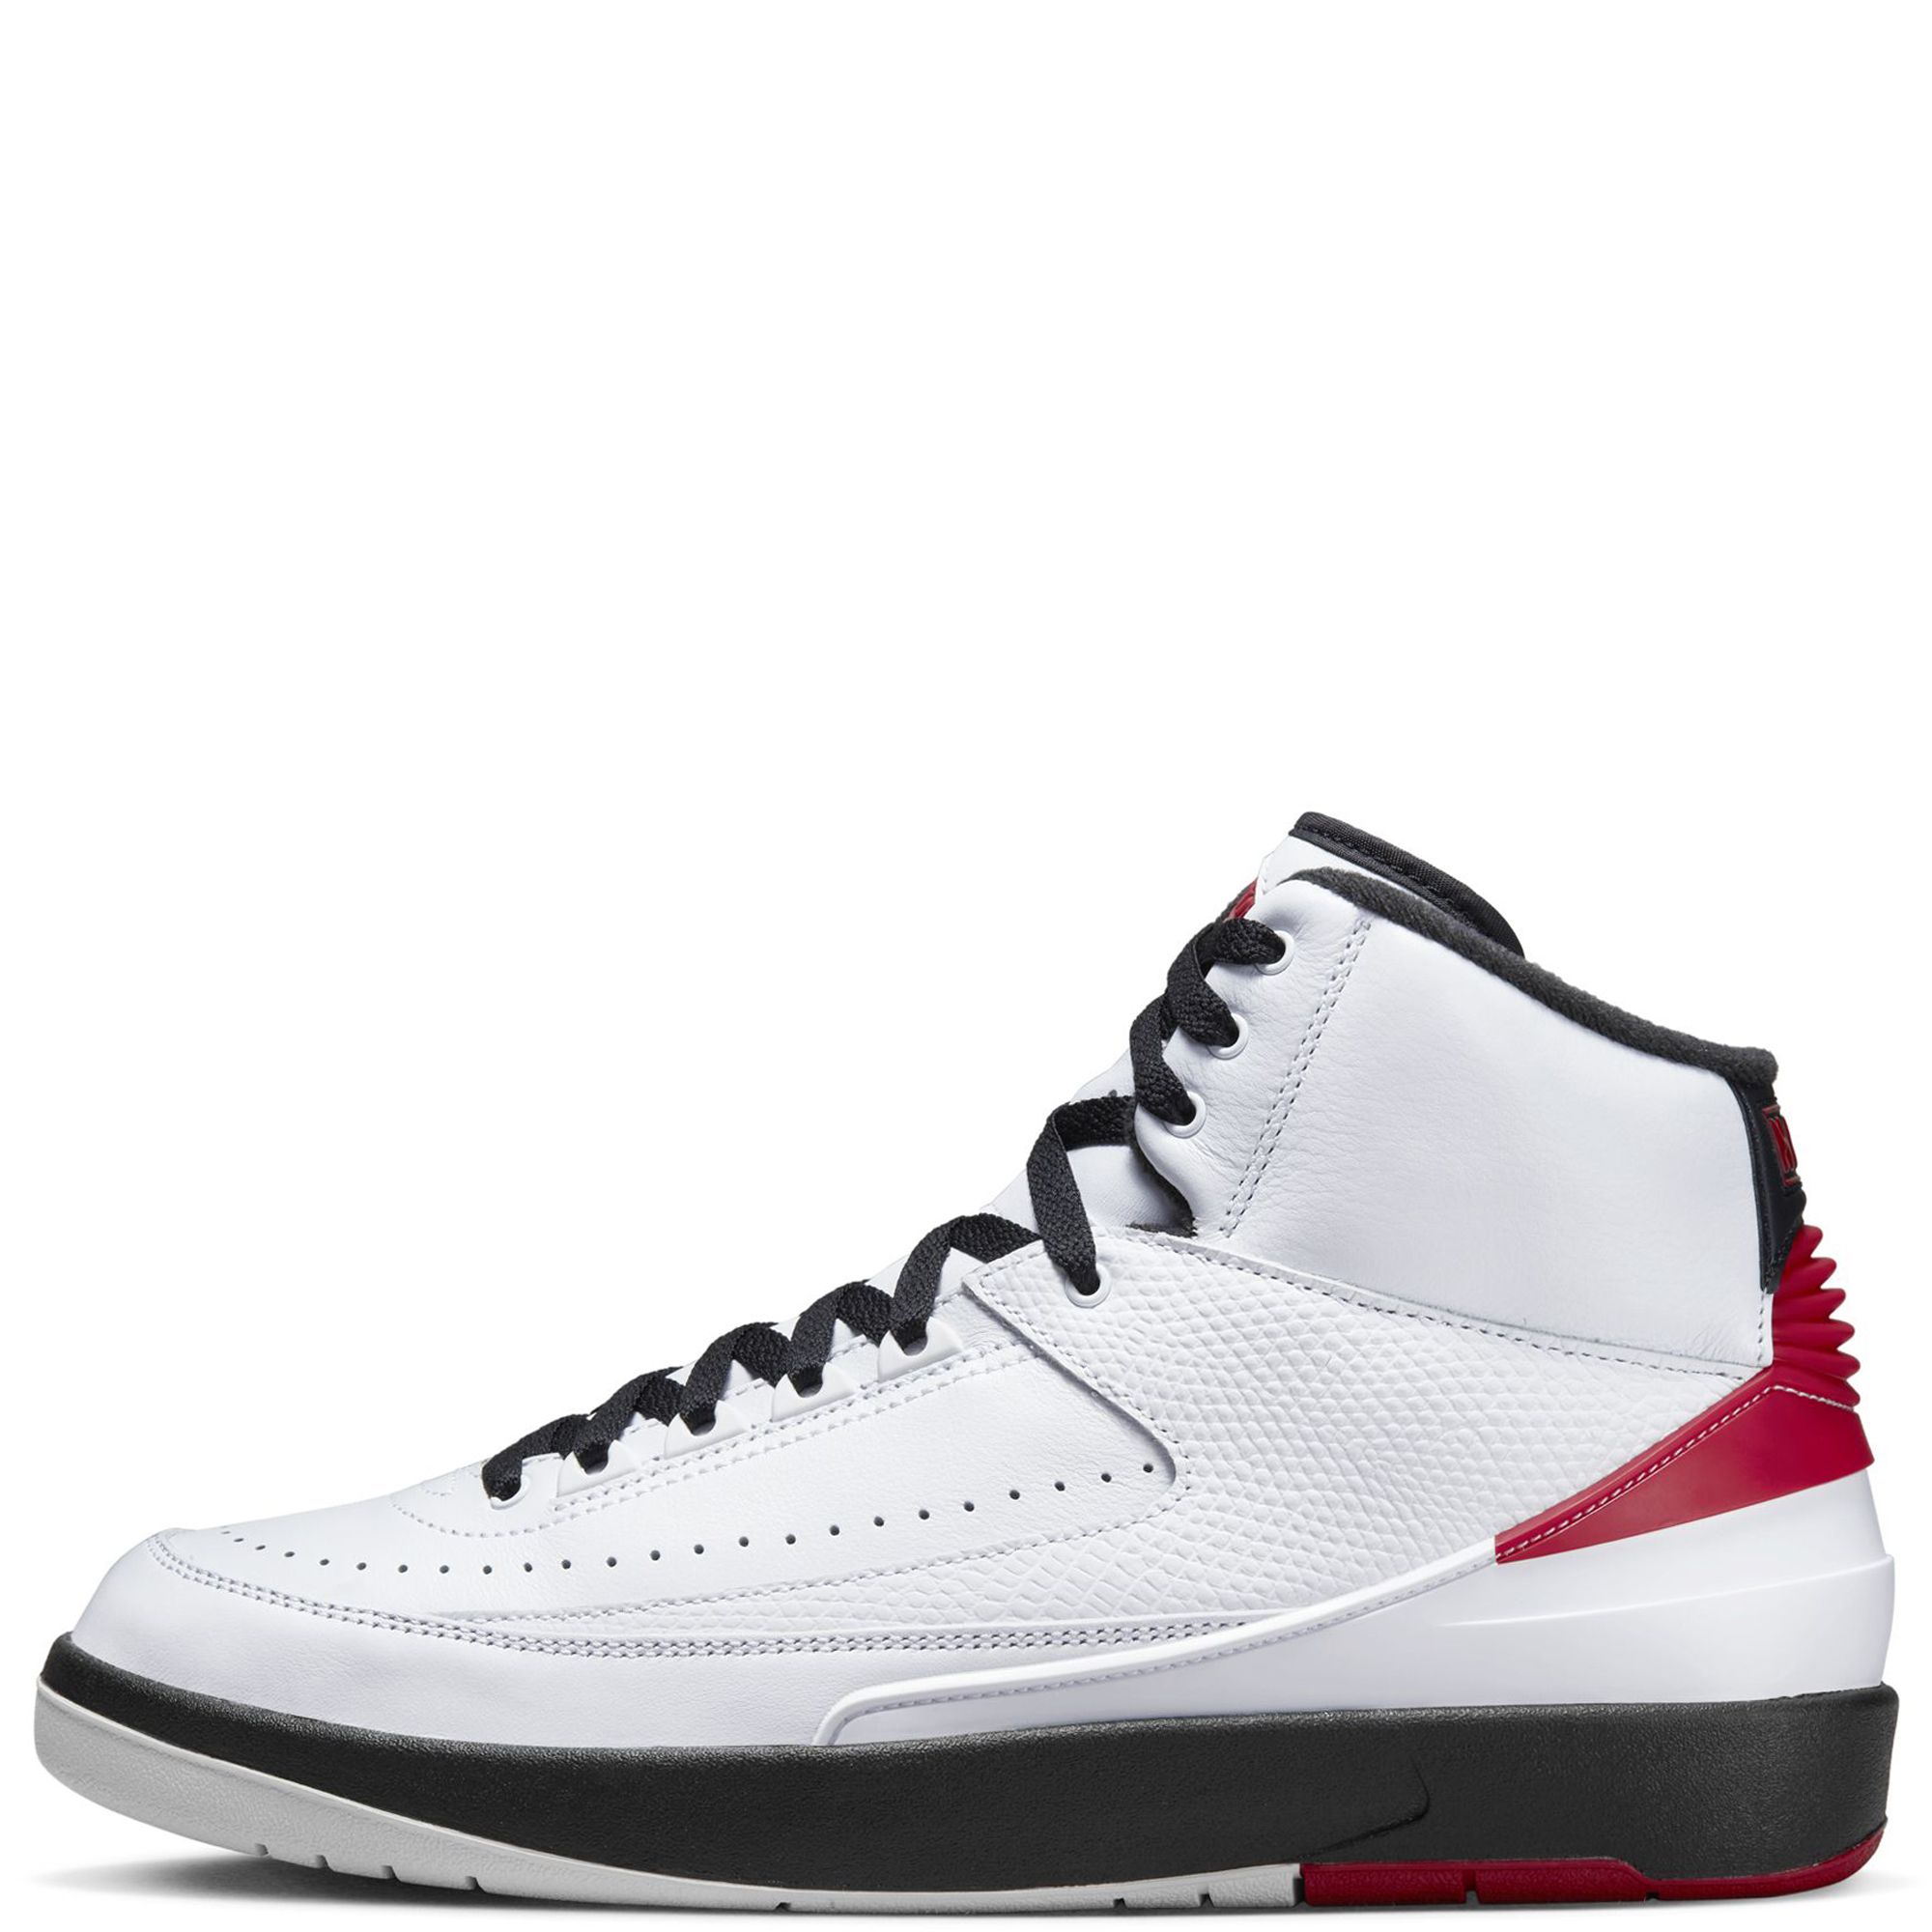 Air Jordan 13 Retro - White/Varsity Red-Black